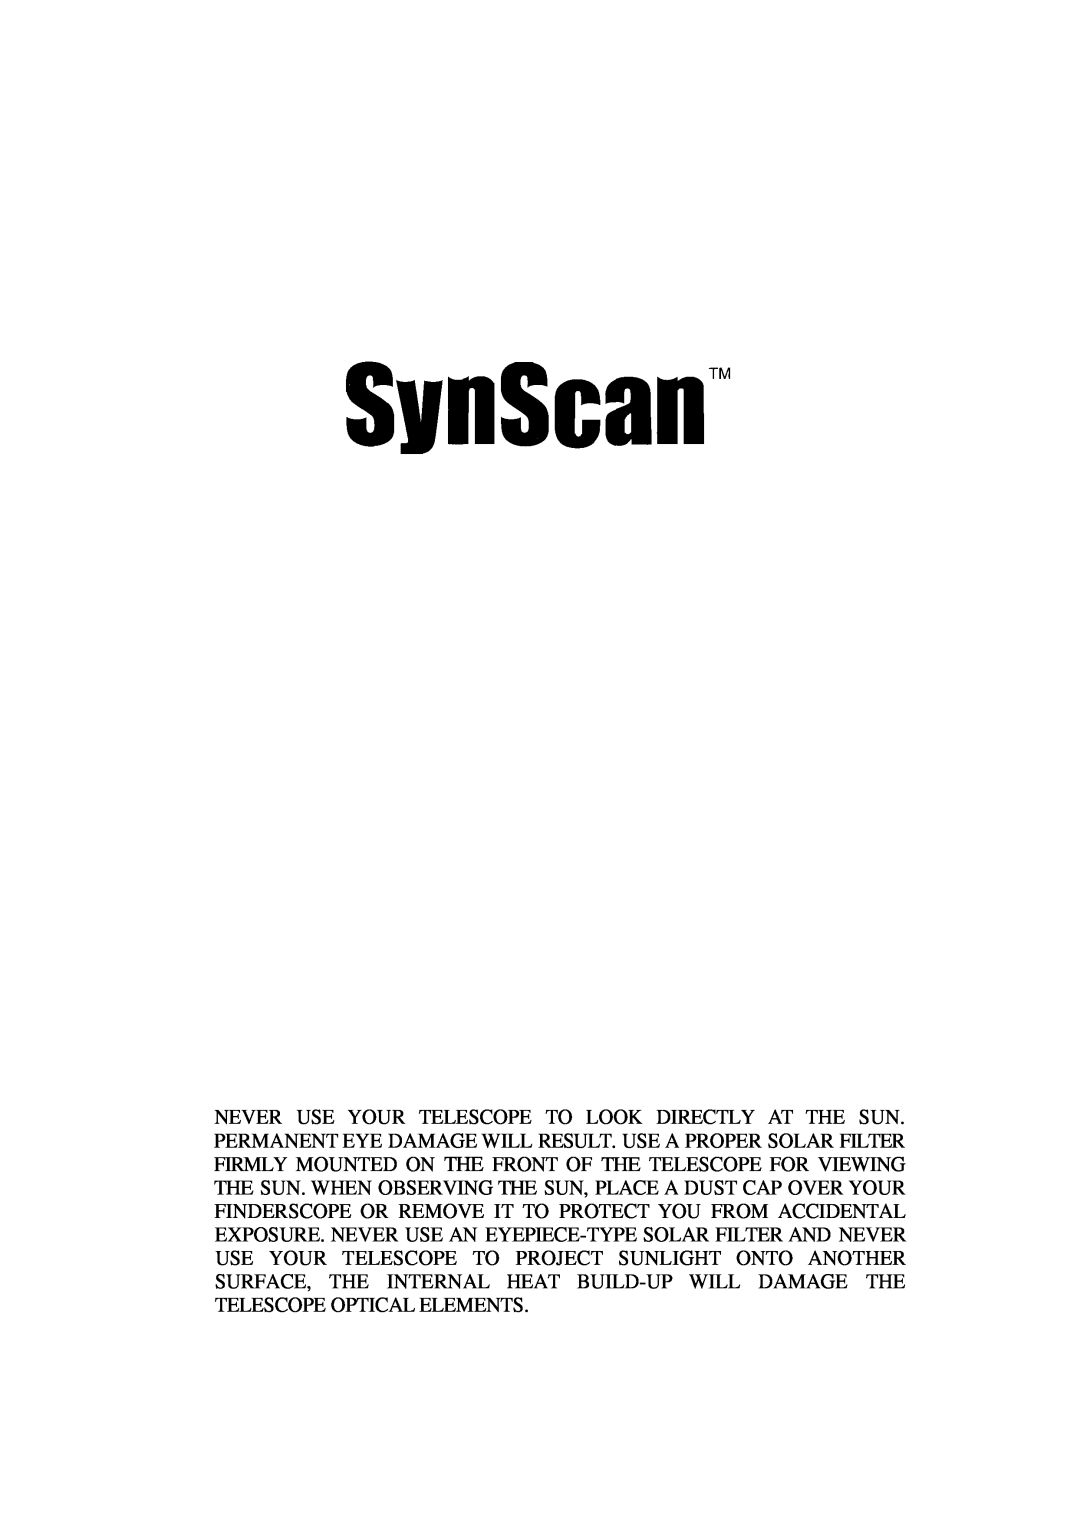 Nexstar SynScan instruction manual 